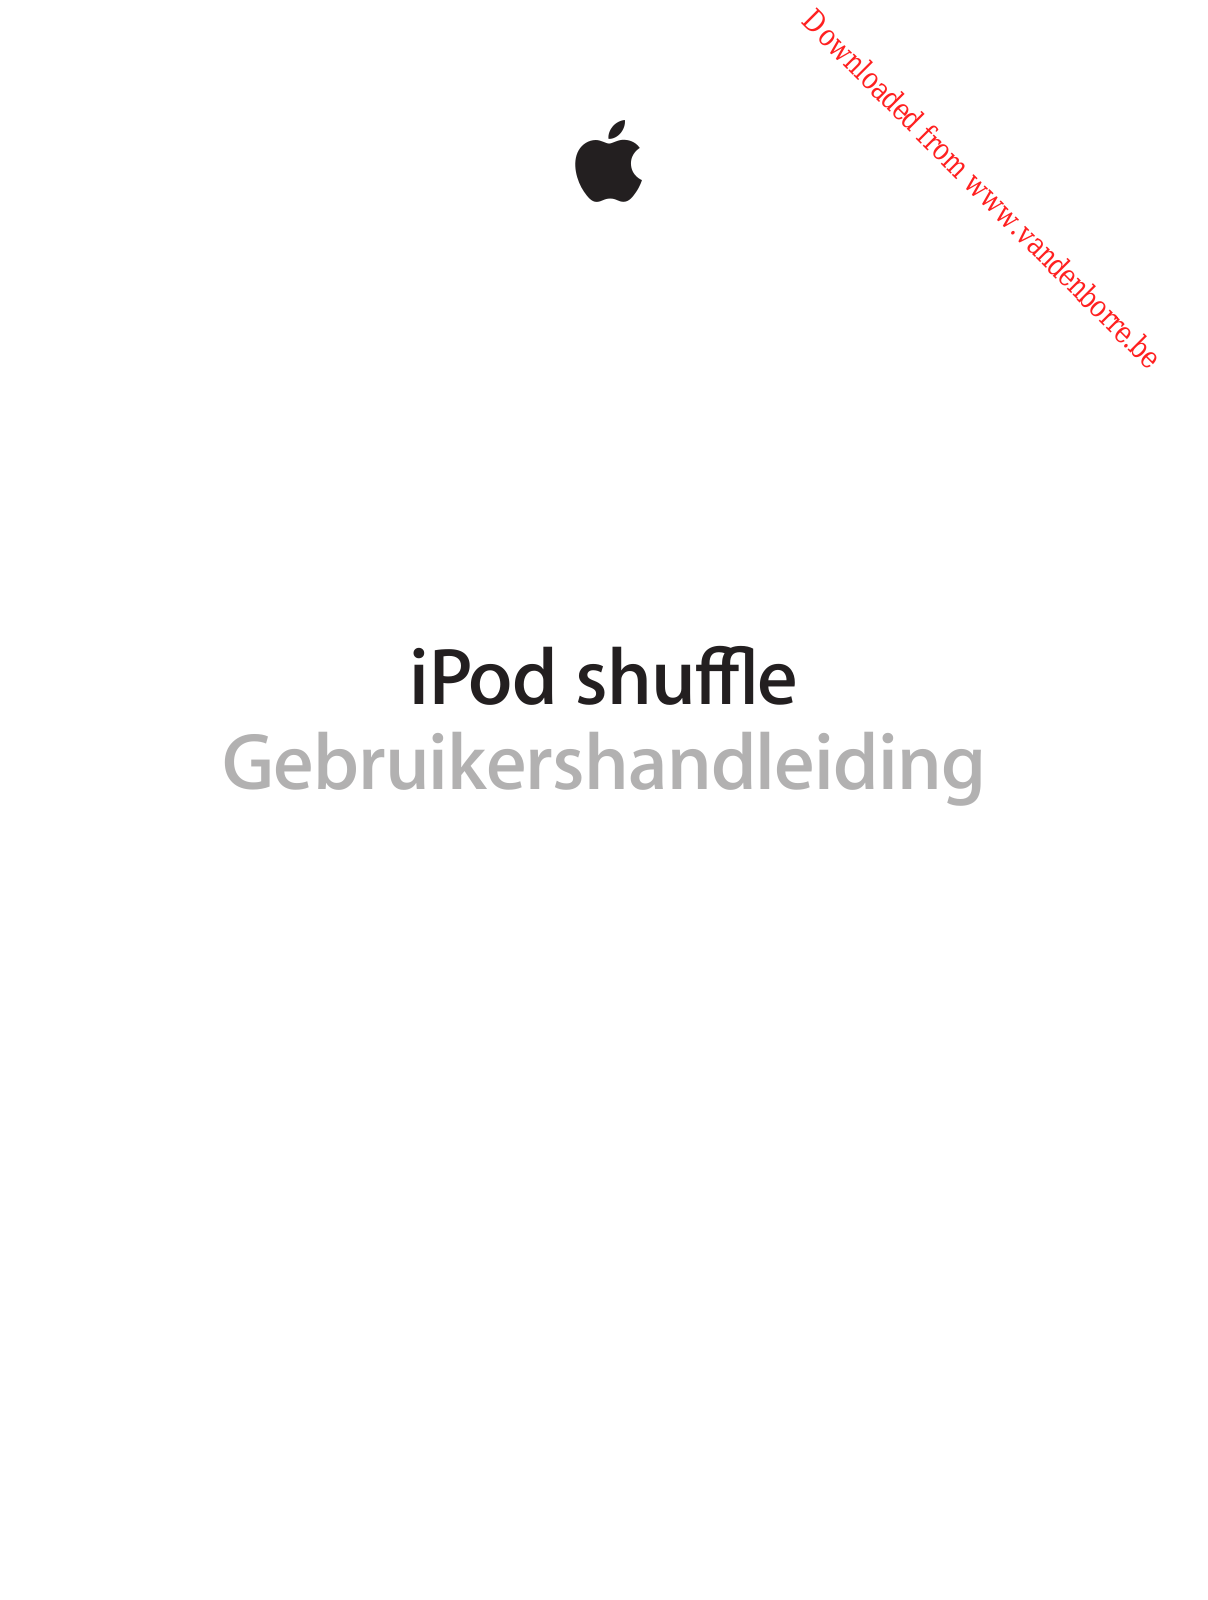 APPLE SHUFFLE VI User Manual